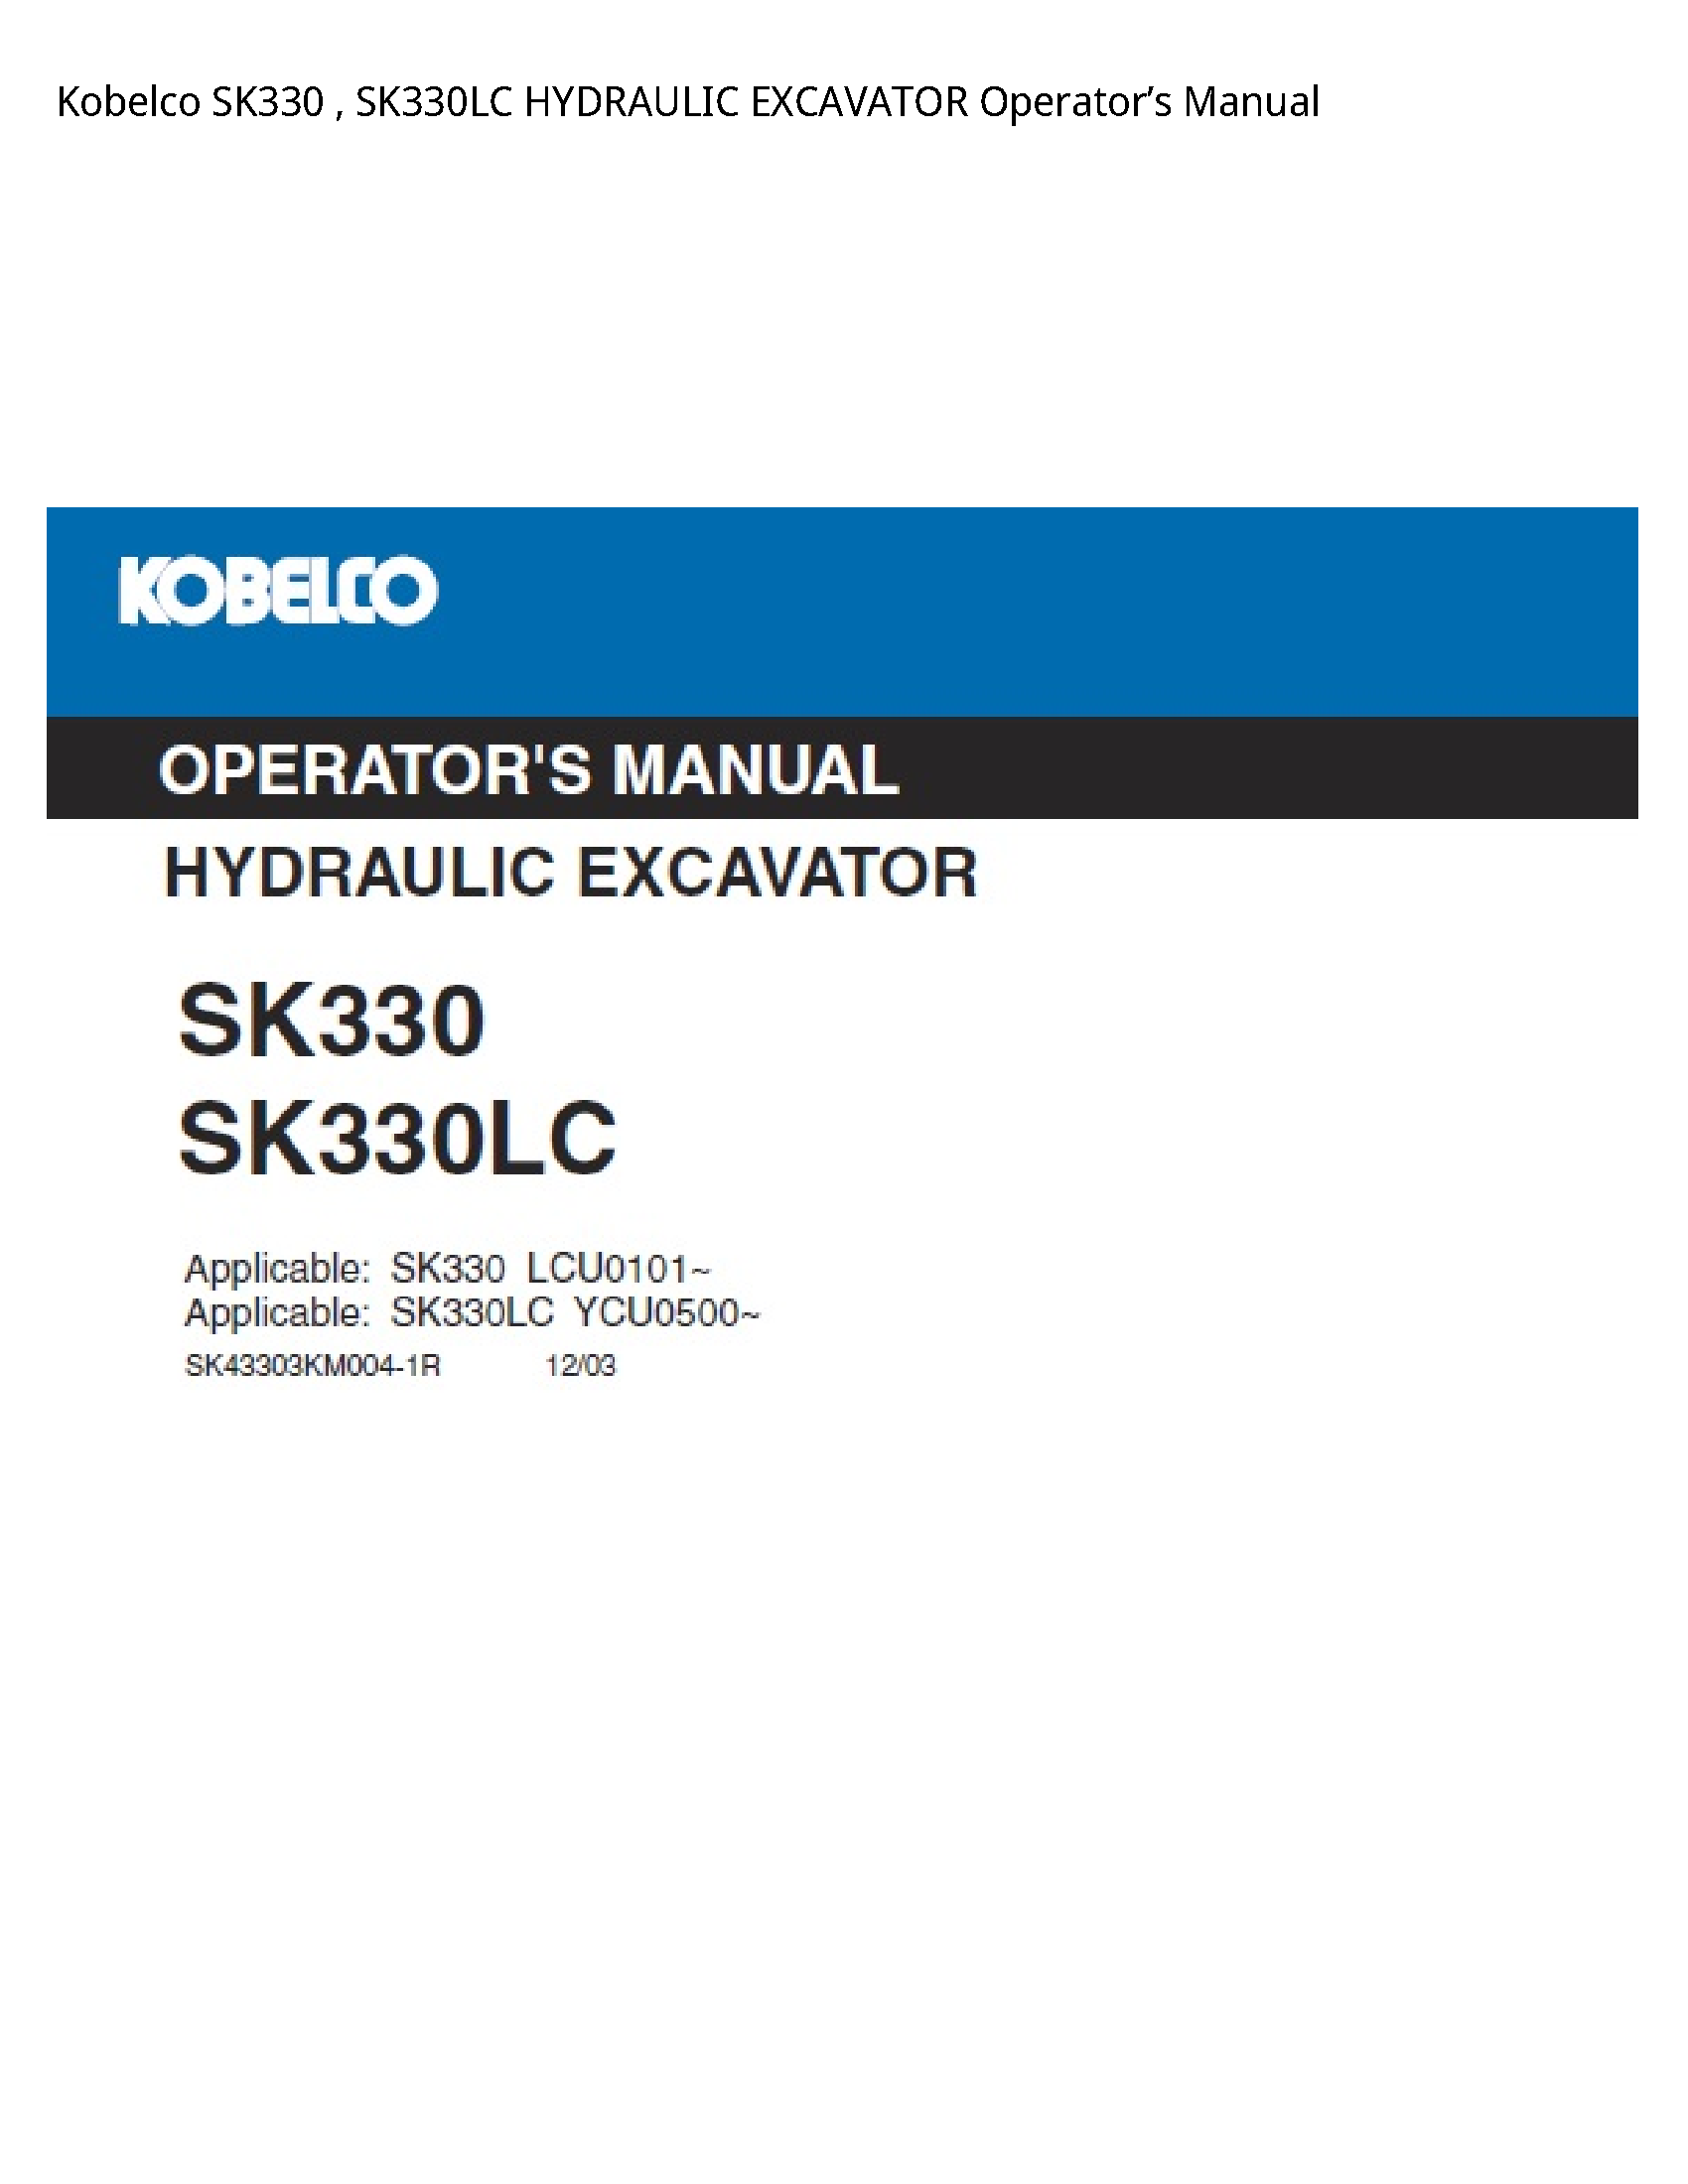 Kobelco SK330 HYDRAULIC EXCAVATOR Operator’s manual